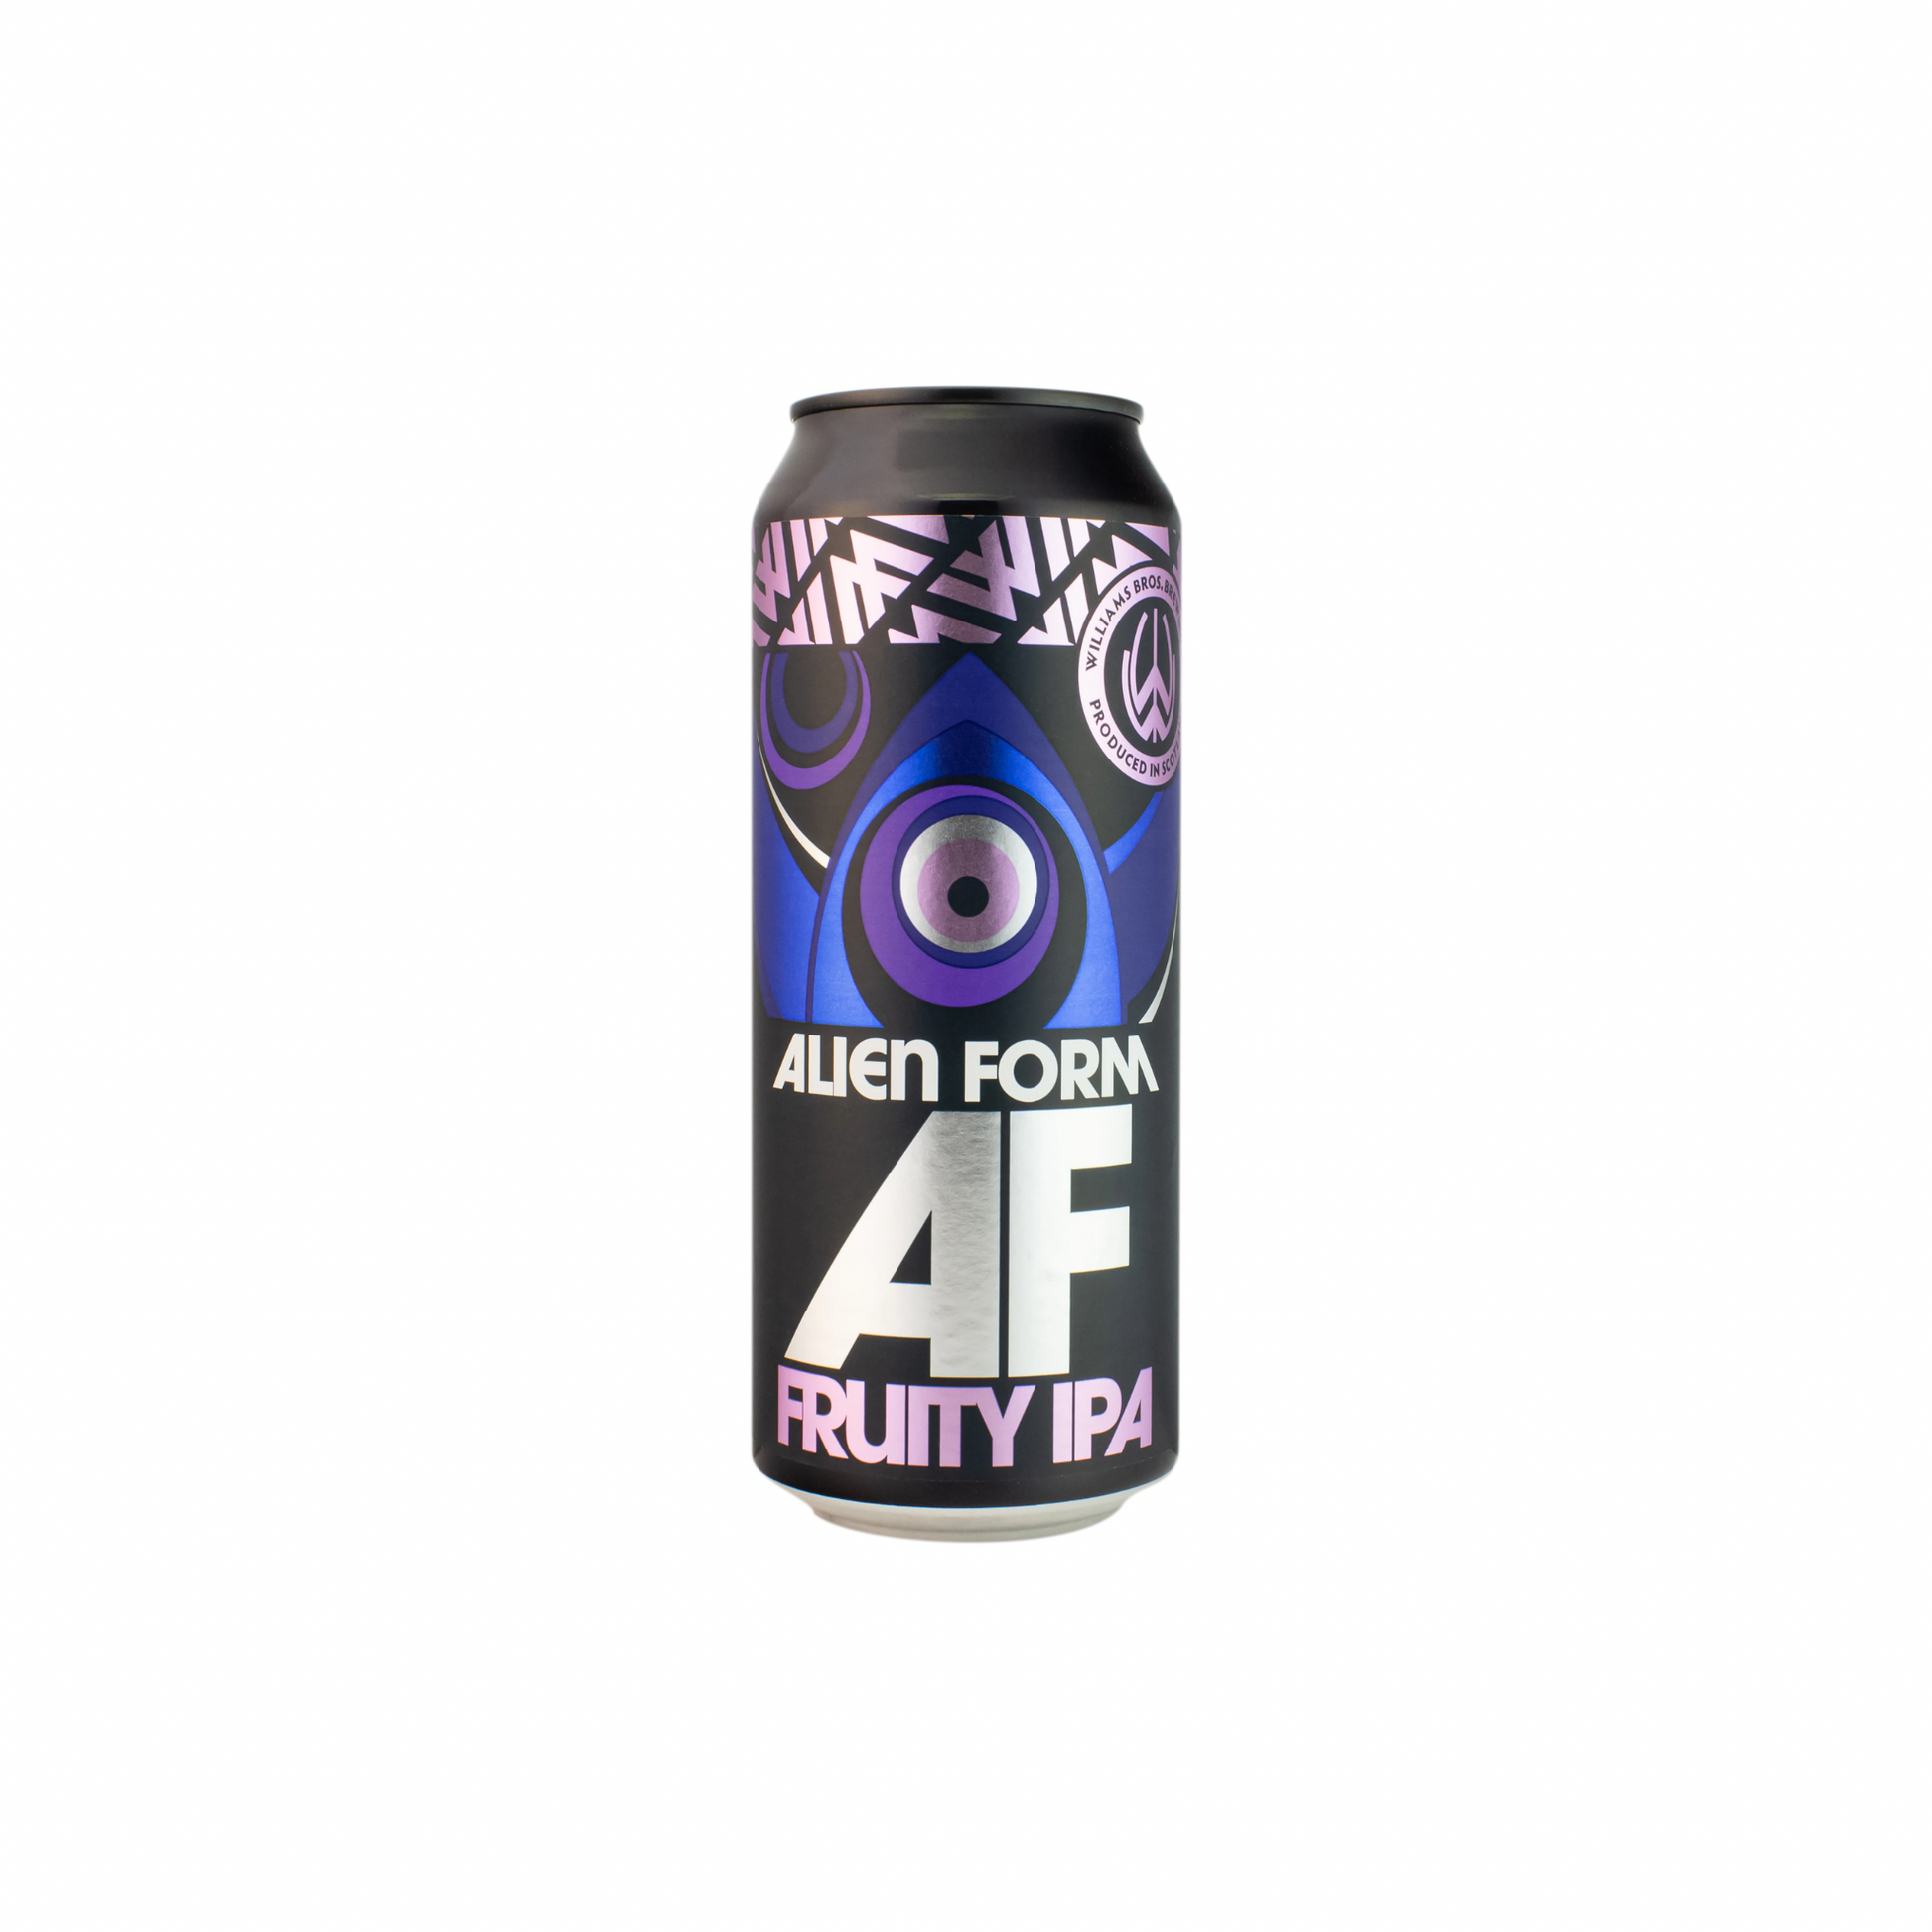 Williams Bros Alien Form AF Alcohol Free Fruity IPA Beer